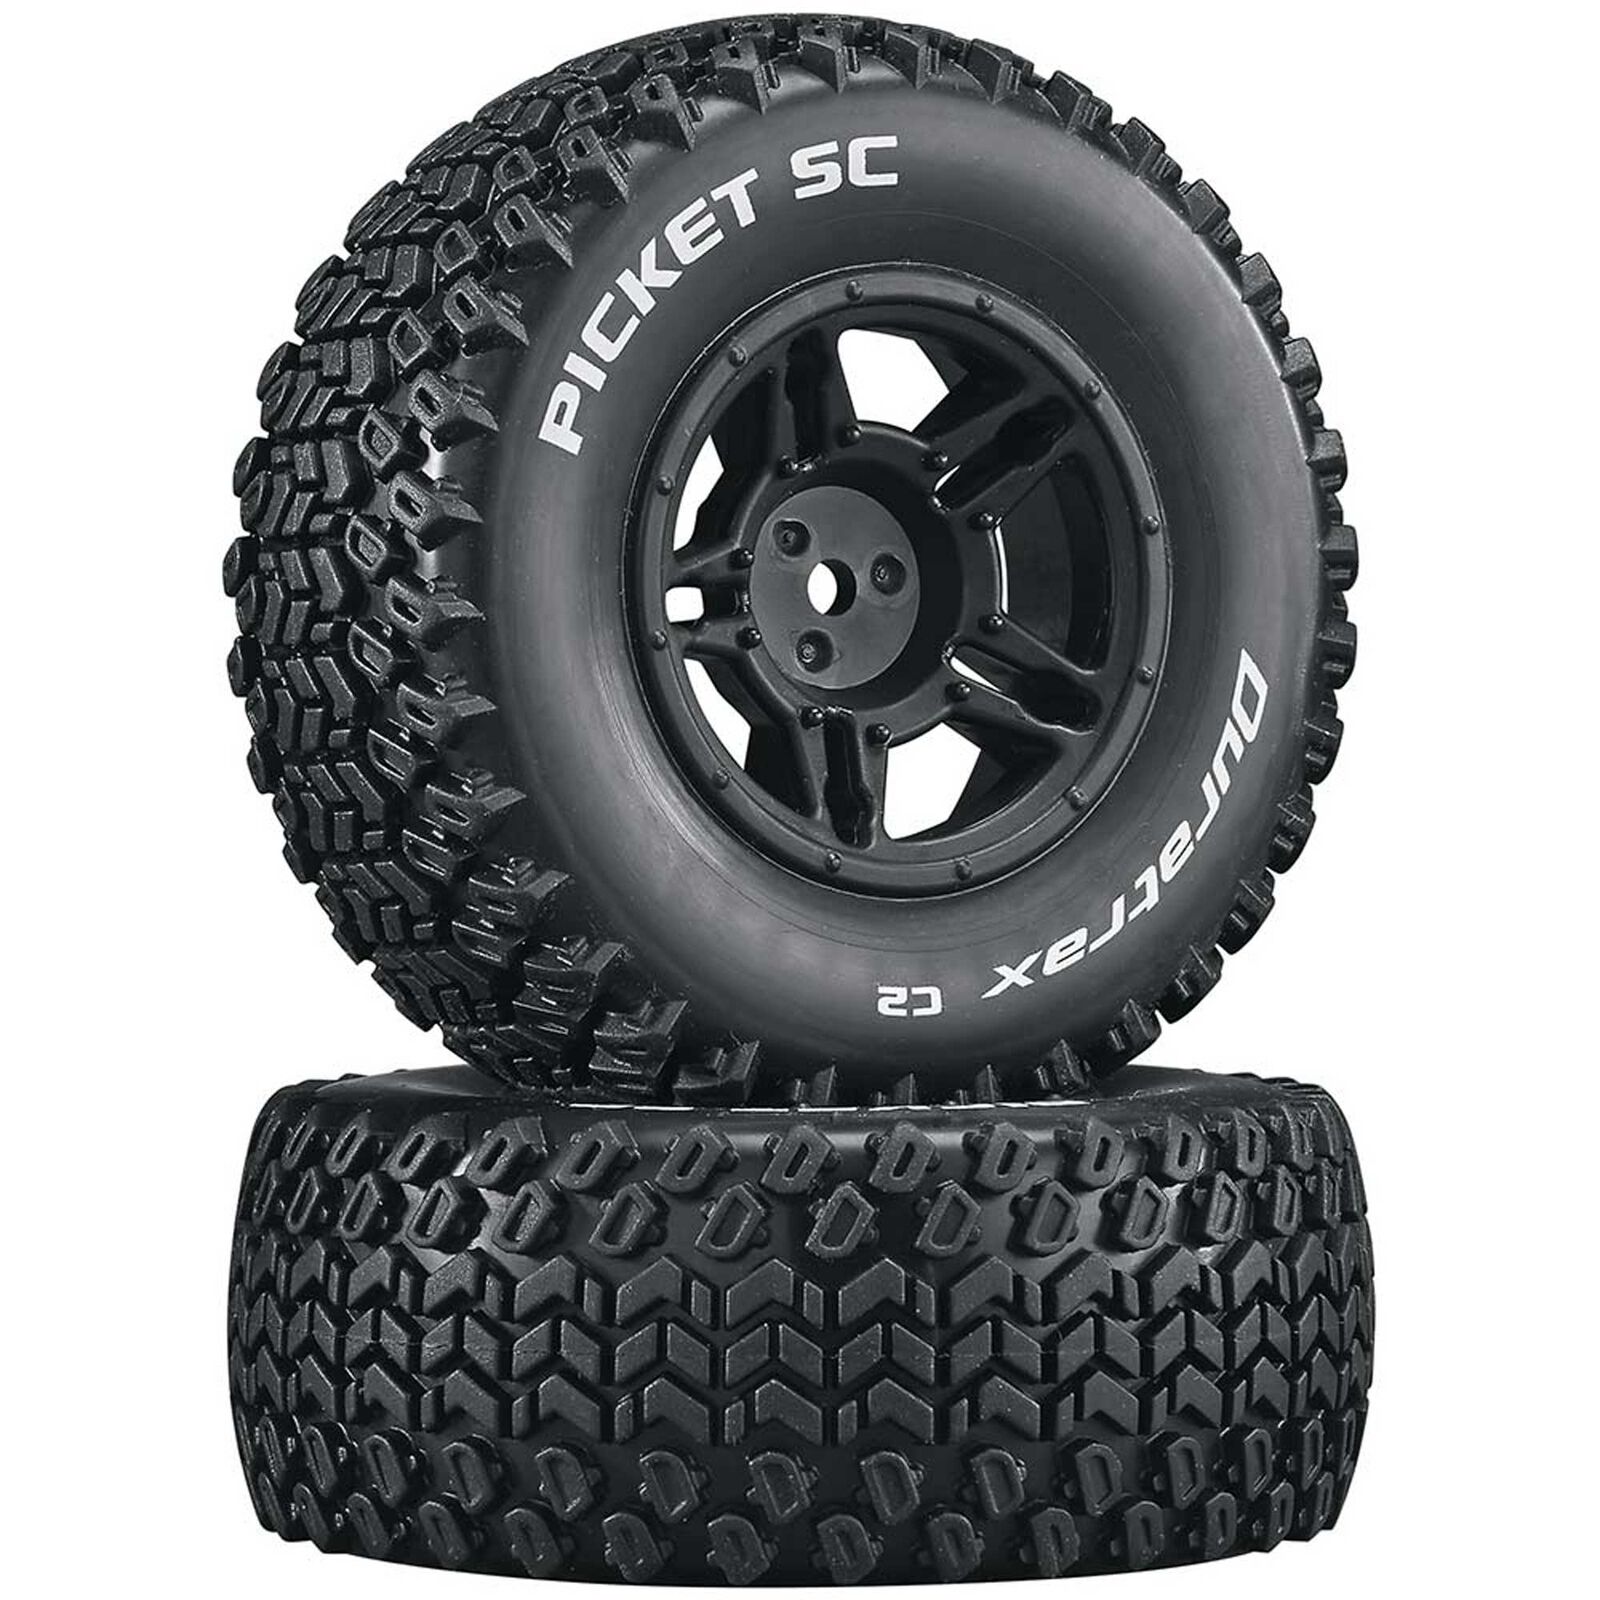 Picket SC C2 Mounted Tires: Slash 4x4 Blitz Front Rear (2)